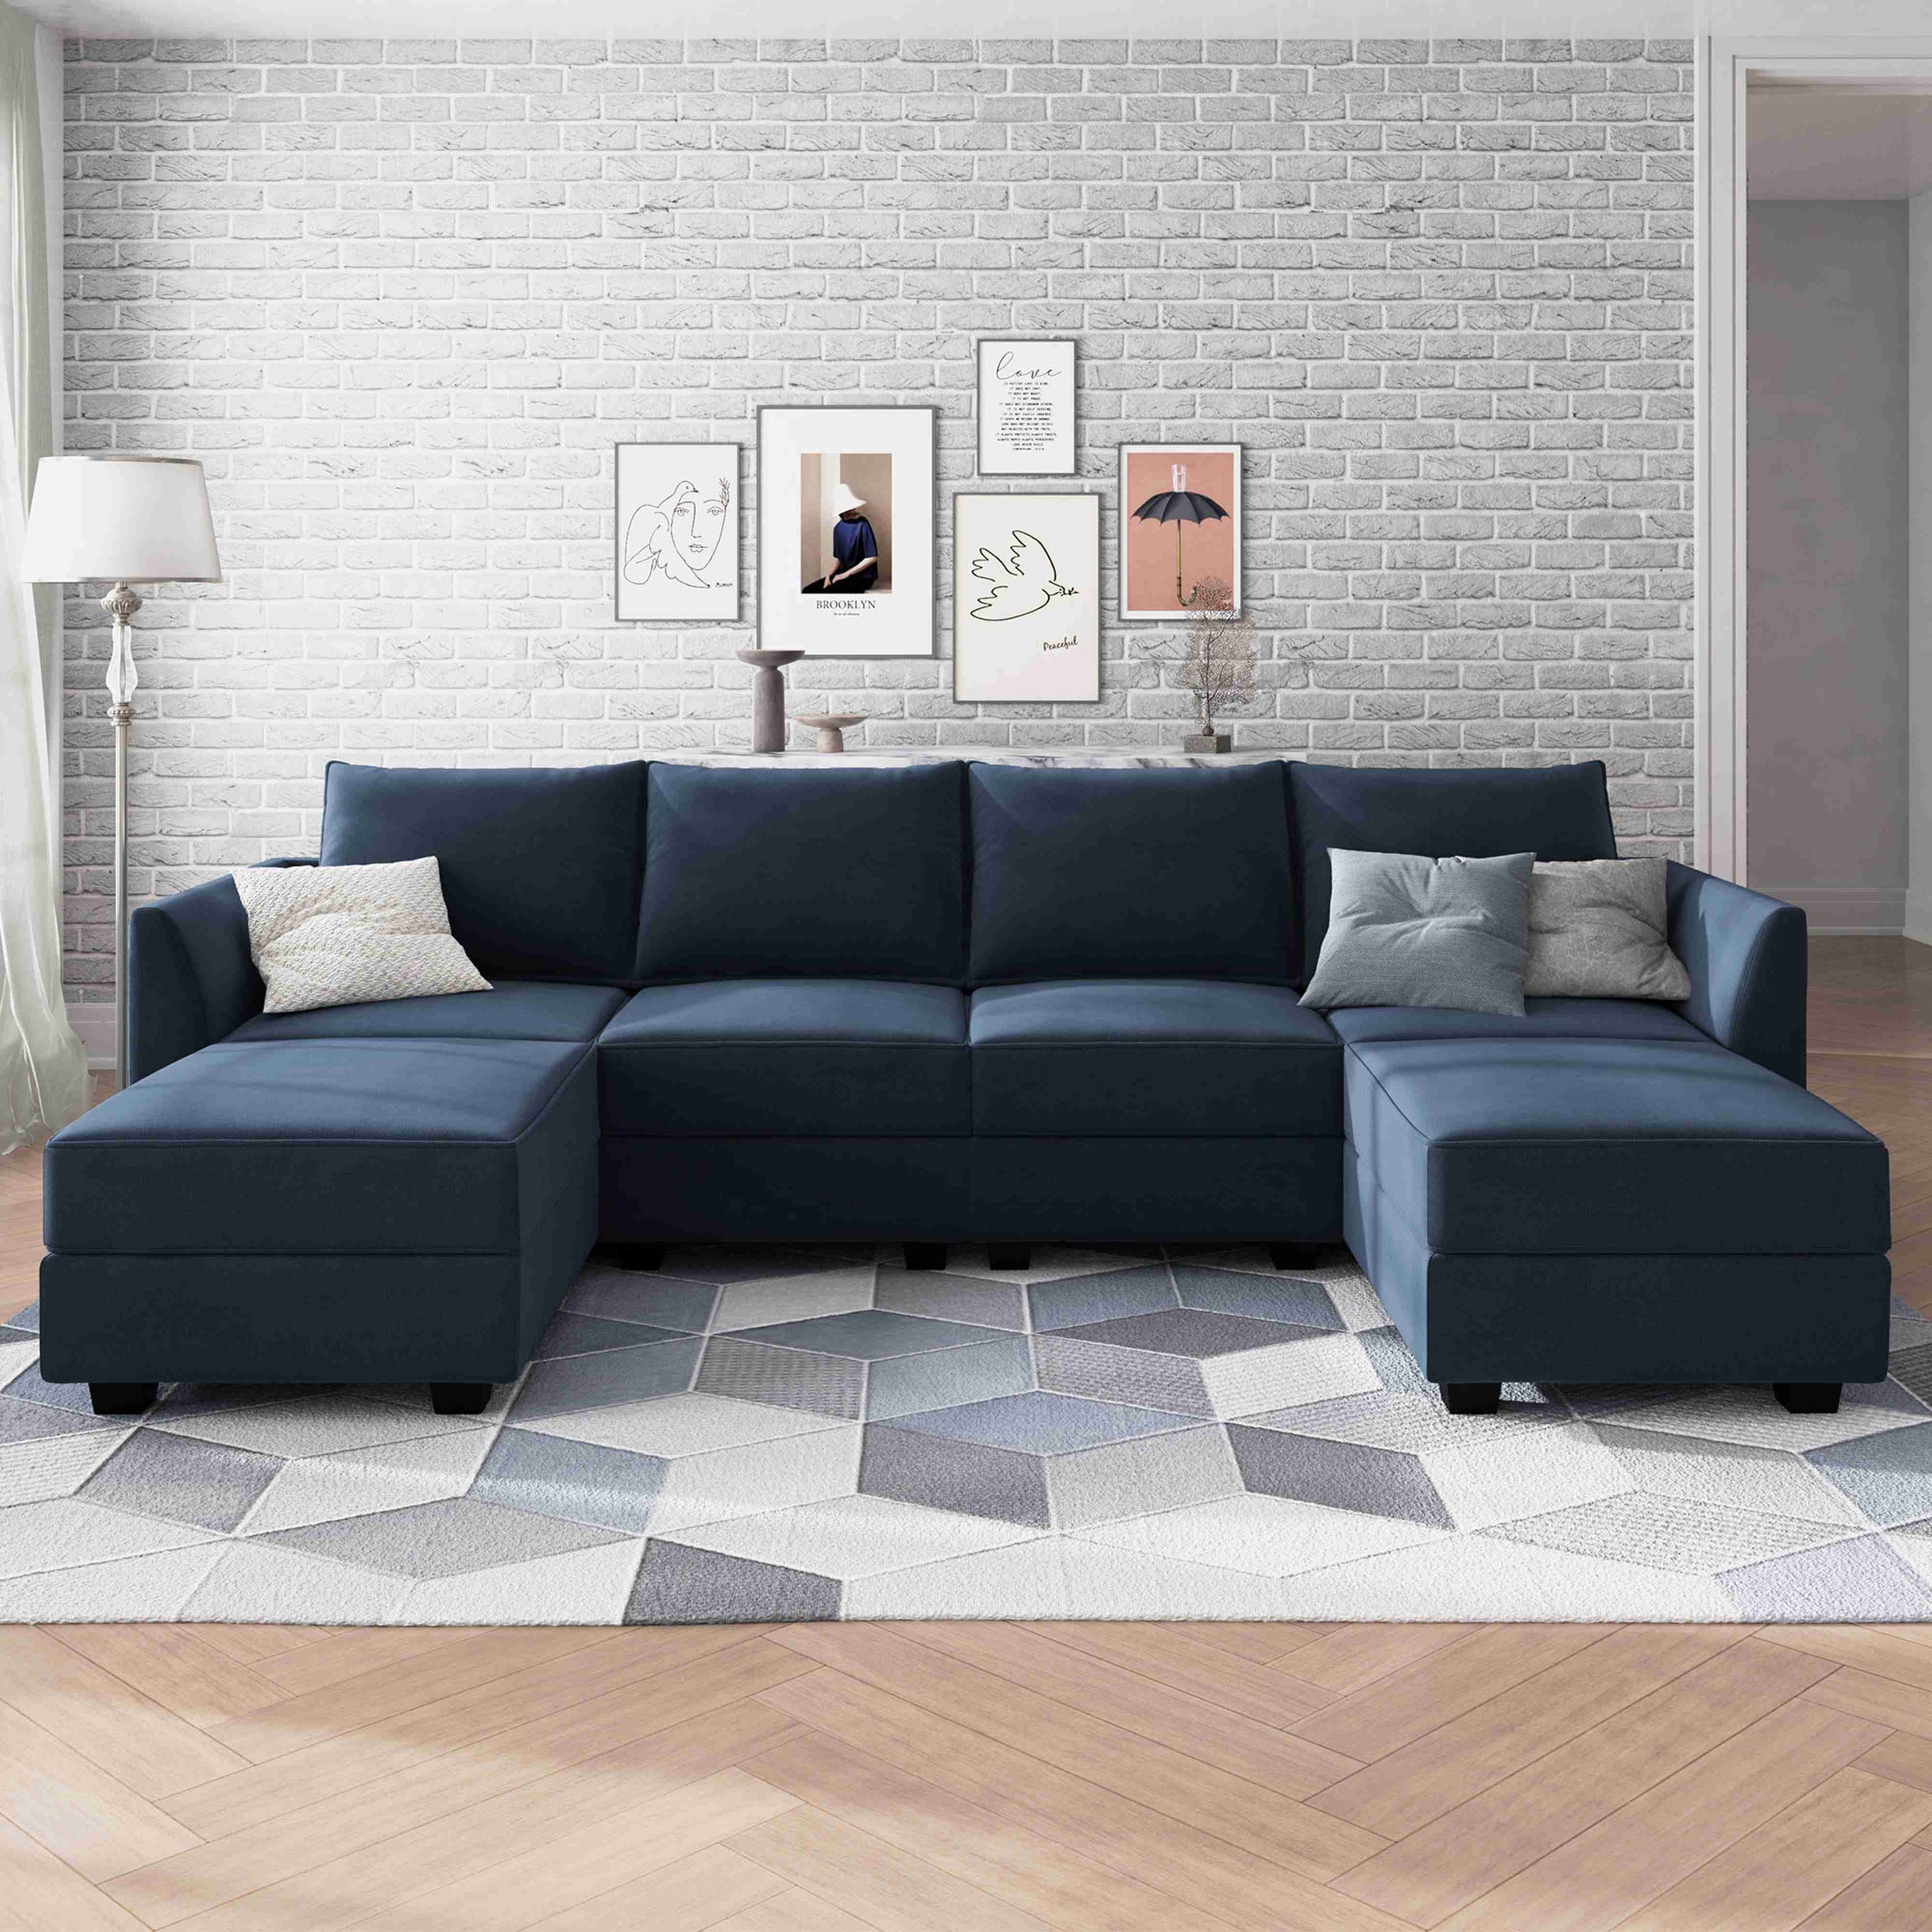 Honbay Velvet Upholstered Modular Sectional Sleeper Sofa With Storage  Ottomans, Free Combination Sofa For Living Room, Navy Blue – Walmart Intended For Upholstered Modular Couches With Storage (Photo 5 of 15)